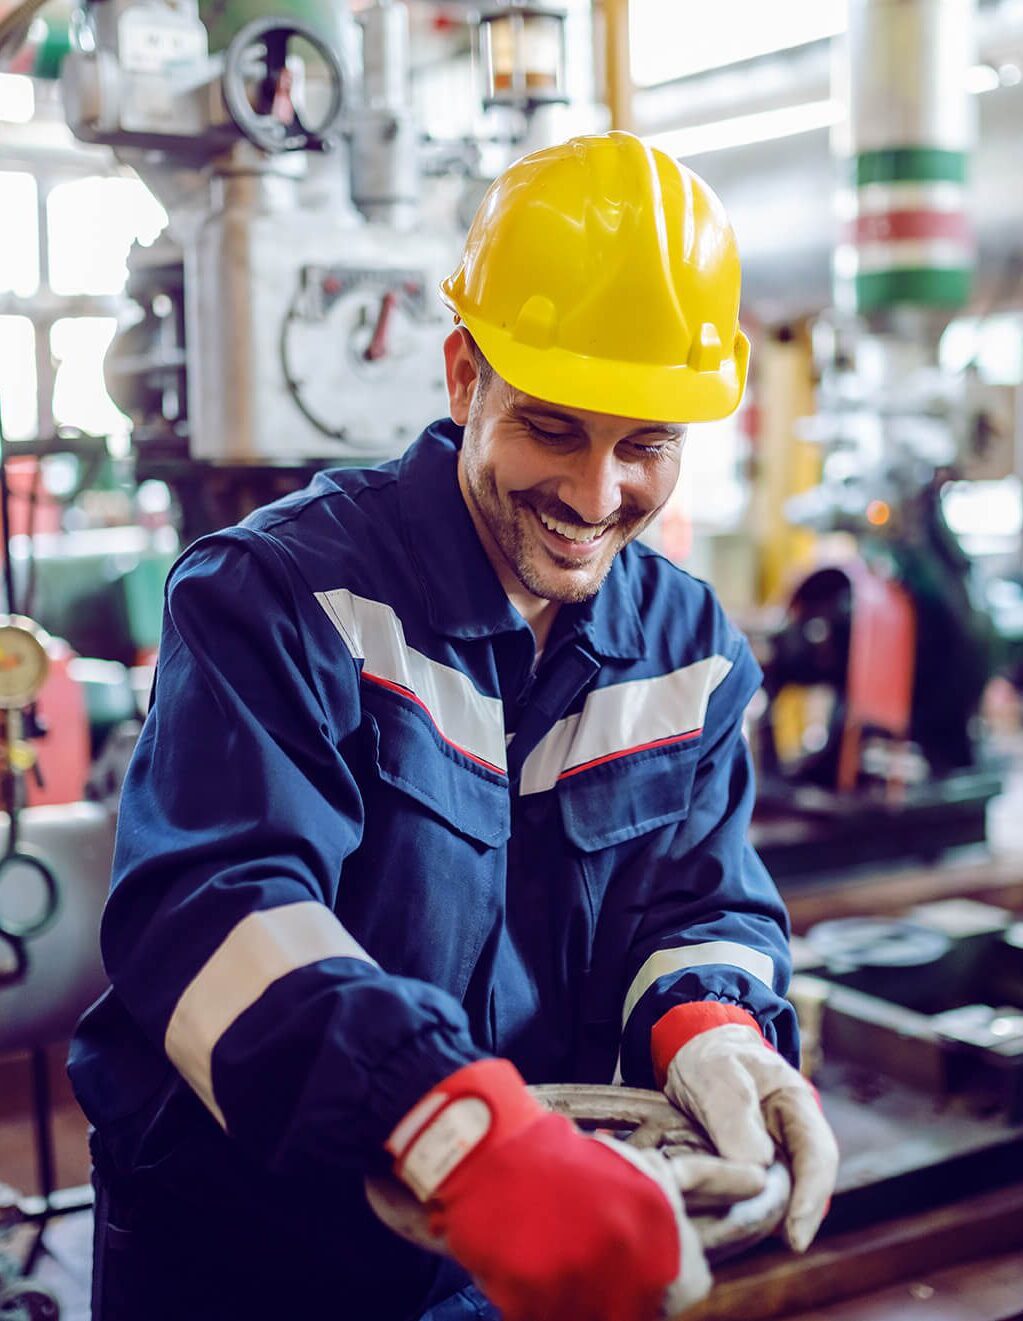 Smiling hardworking energy plant worker in working suit screwing valve